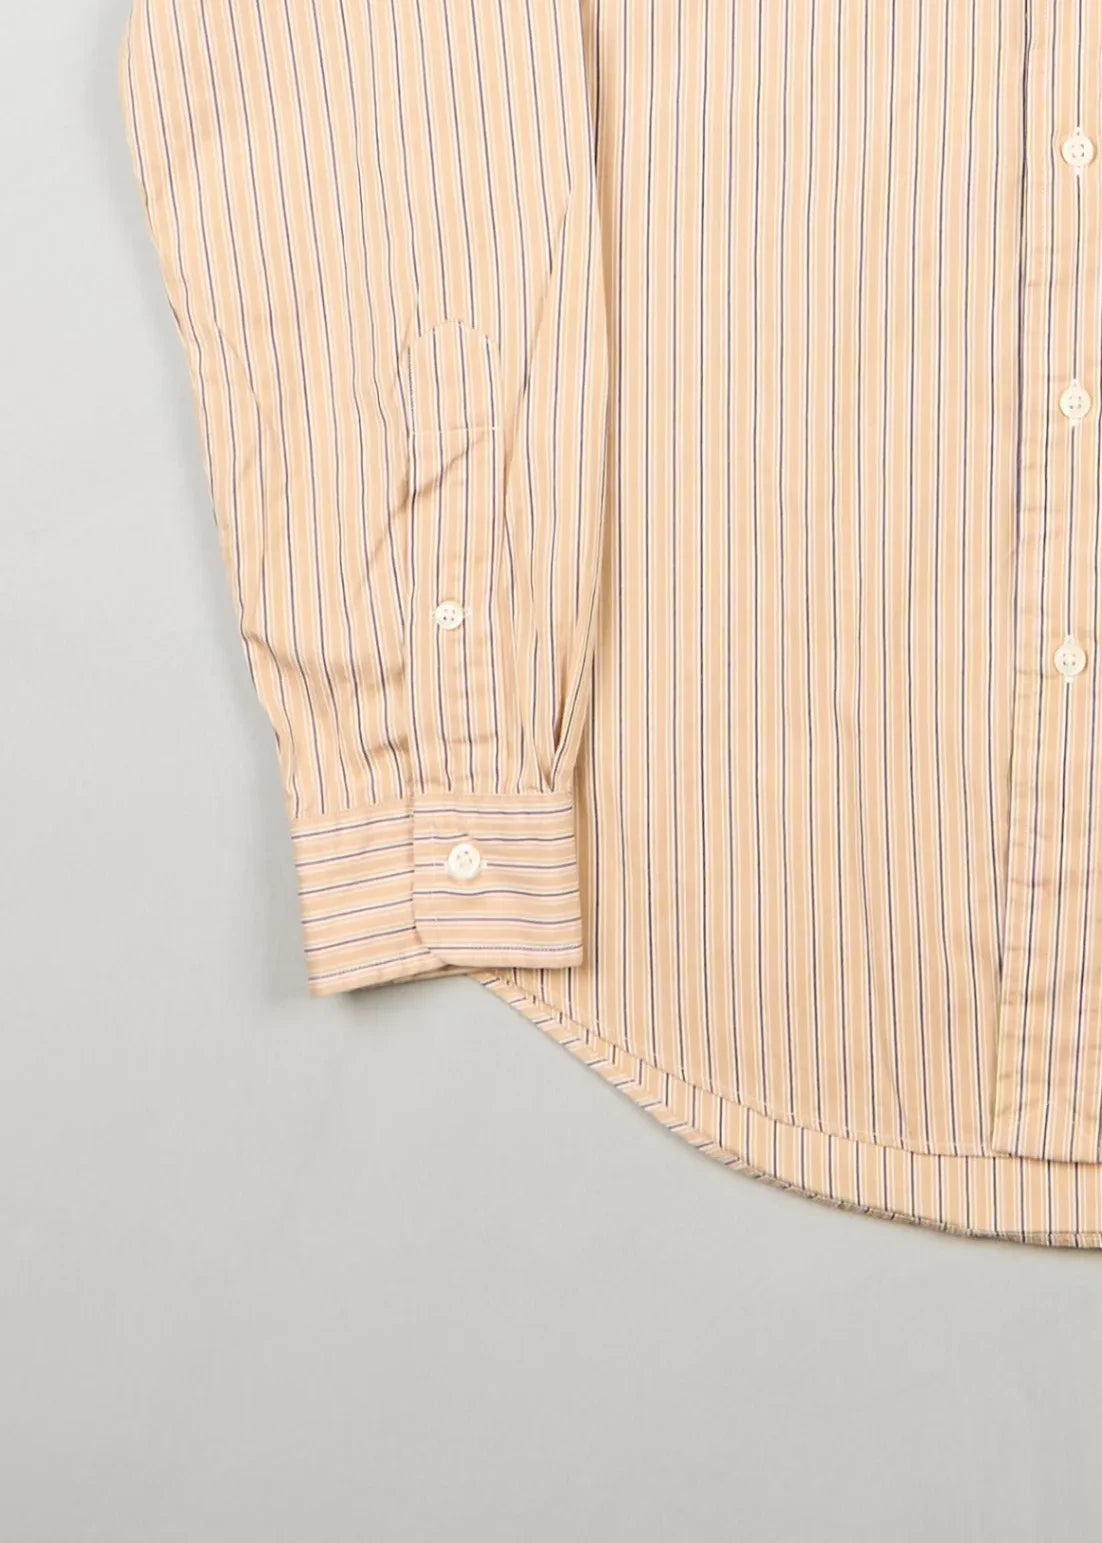 Ralph Lauren - Shirt (S) Bottom Left